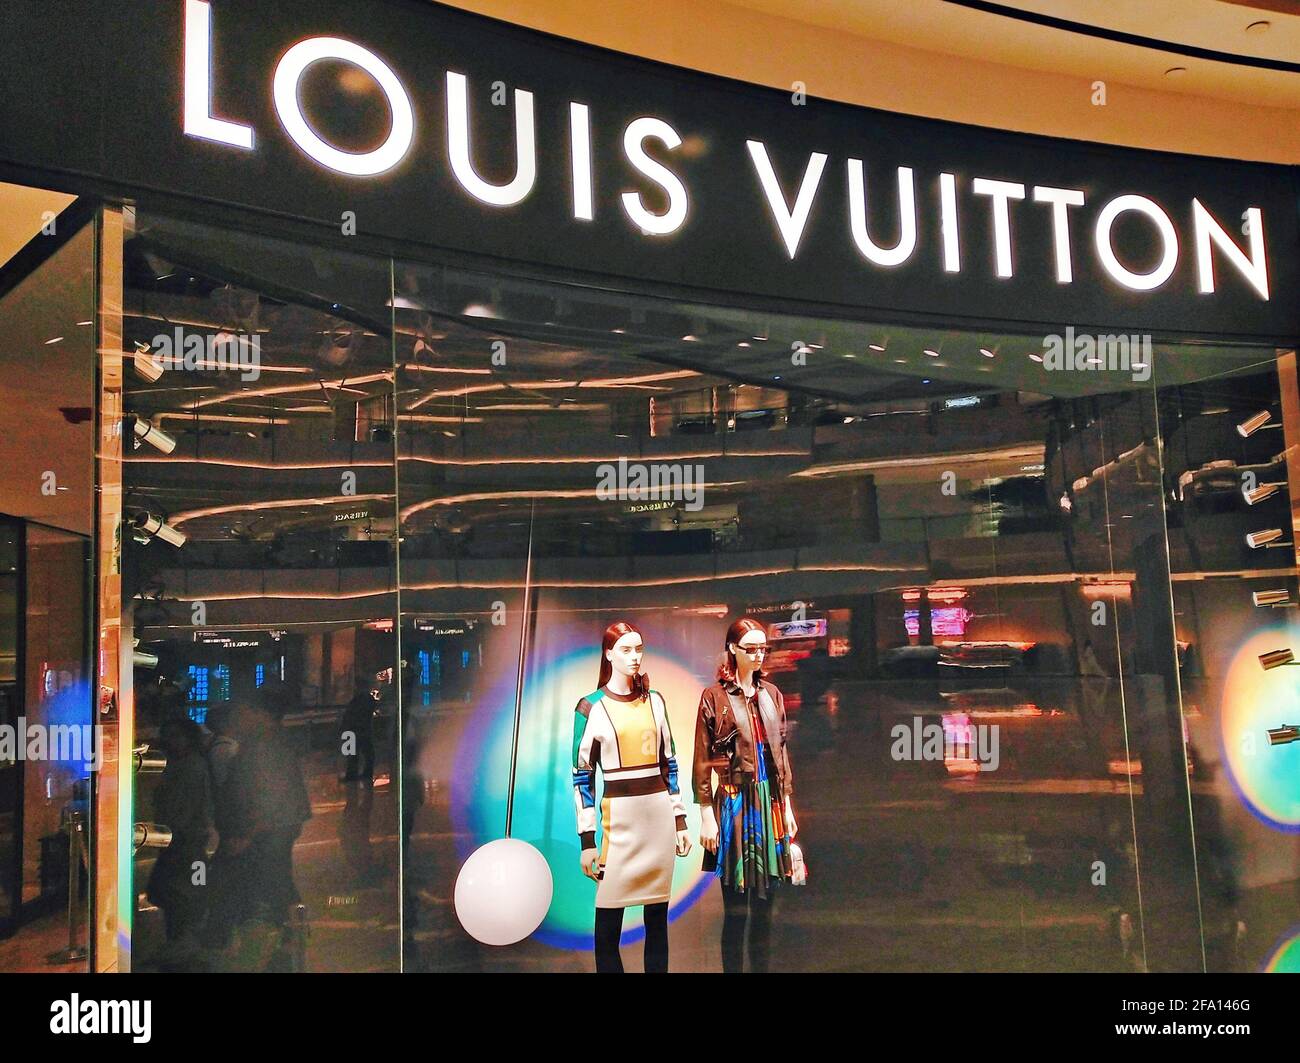 Louis Vuitton Brasília Shopping Iguatemi store Brazil